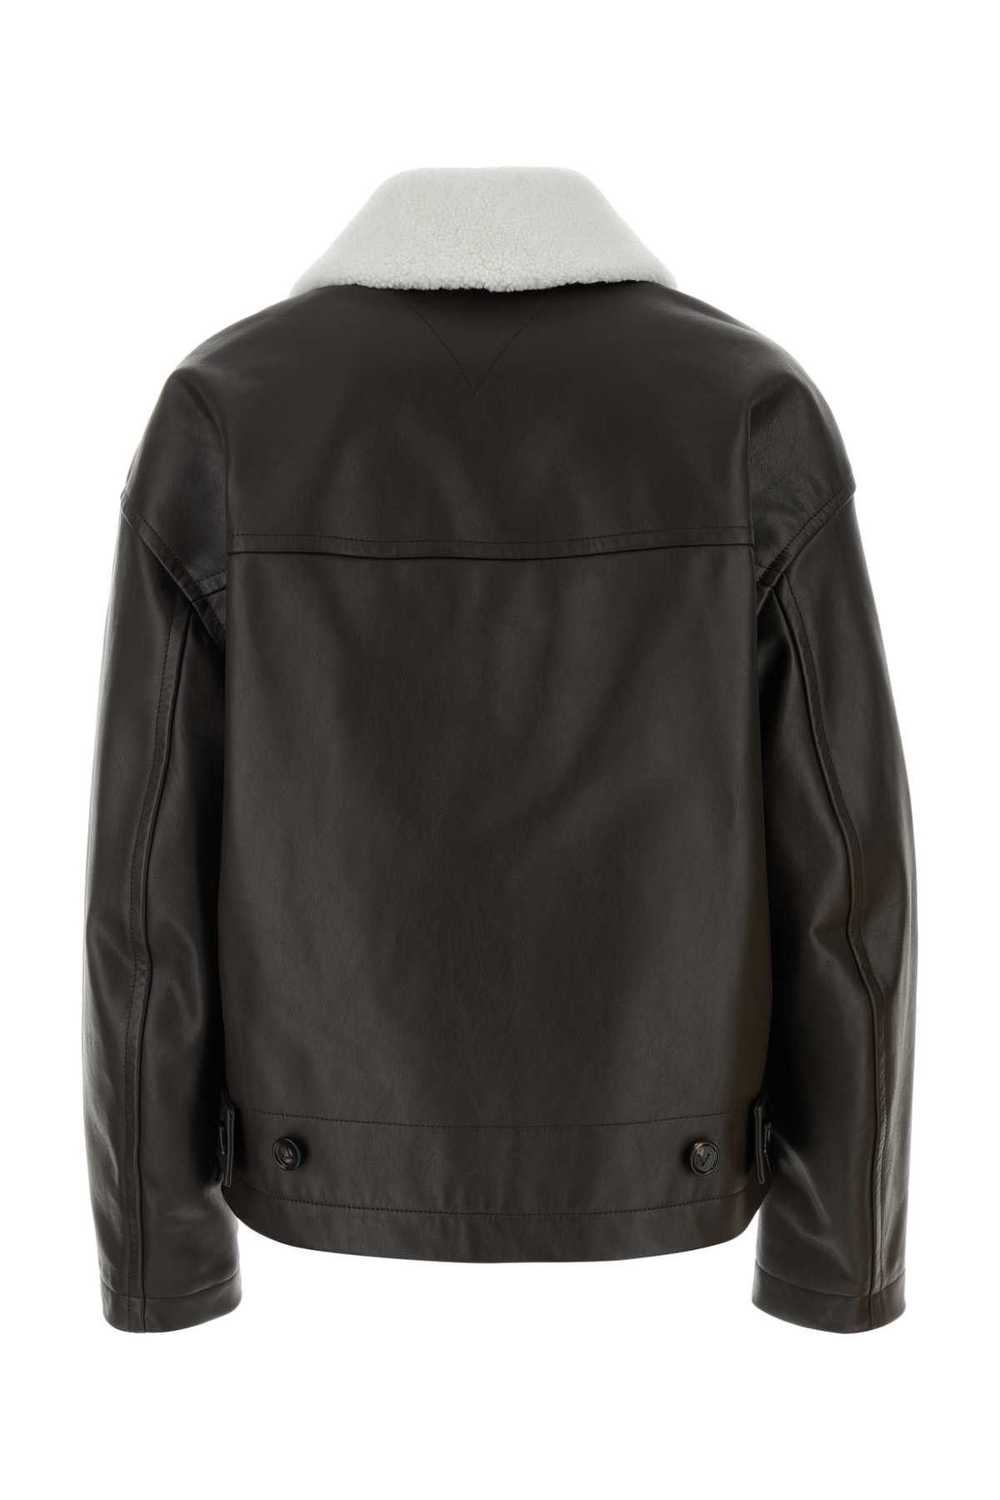 Bottega Veneta Dark Brown Leather Jacket - image 2